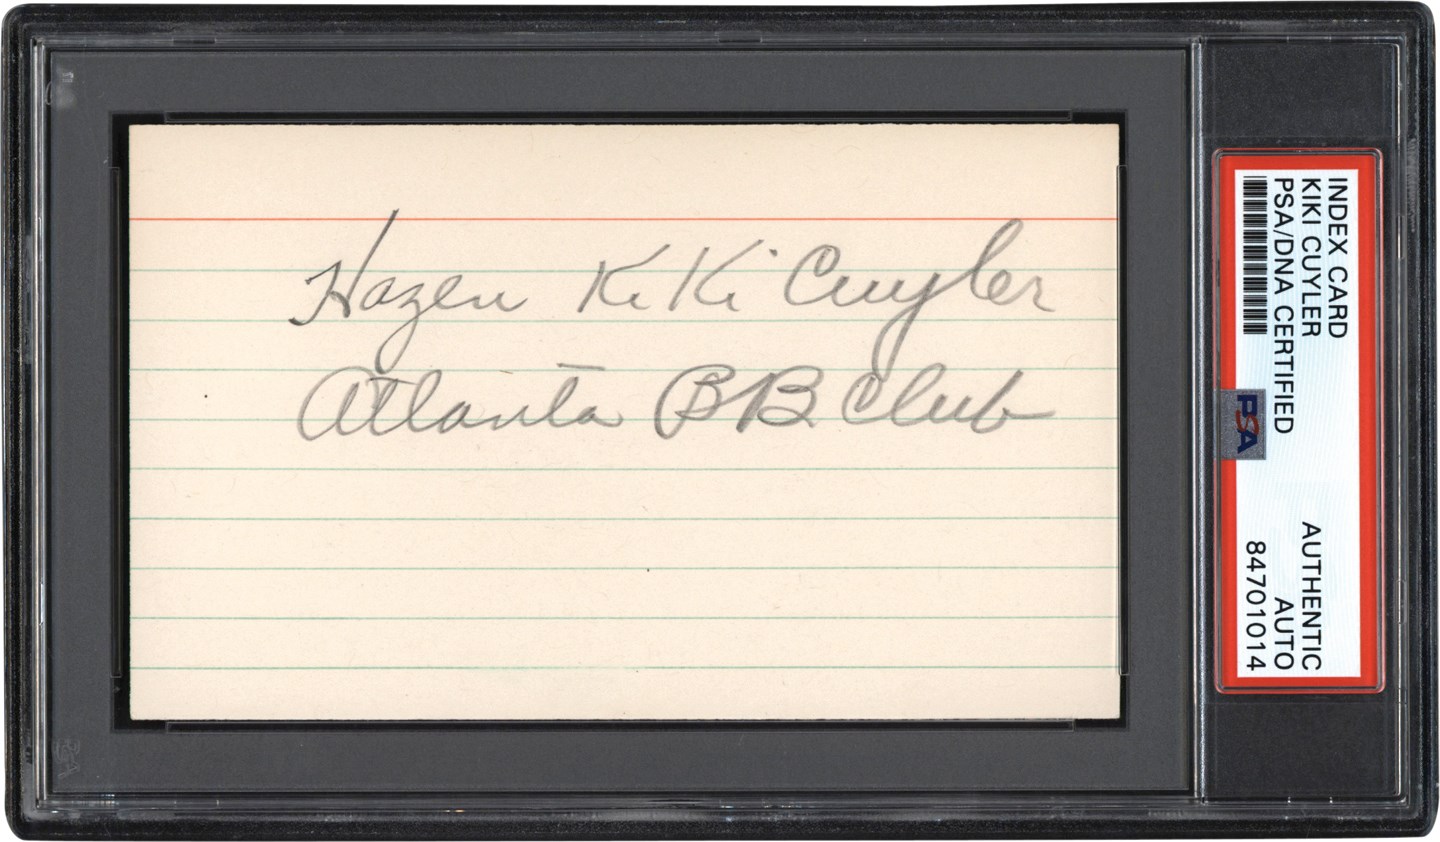 - KiKi Cuyler Signed Index Card (PSA)